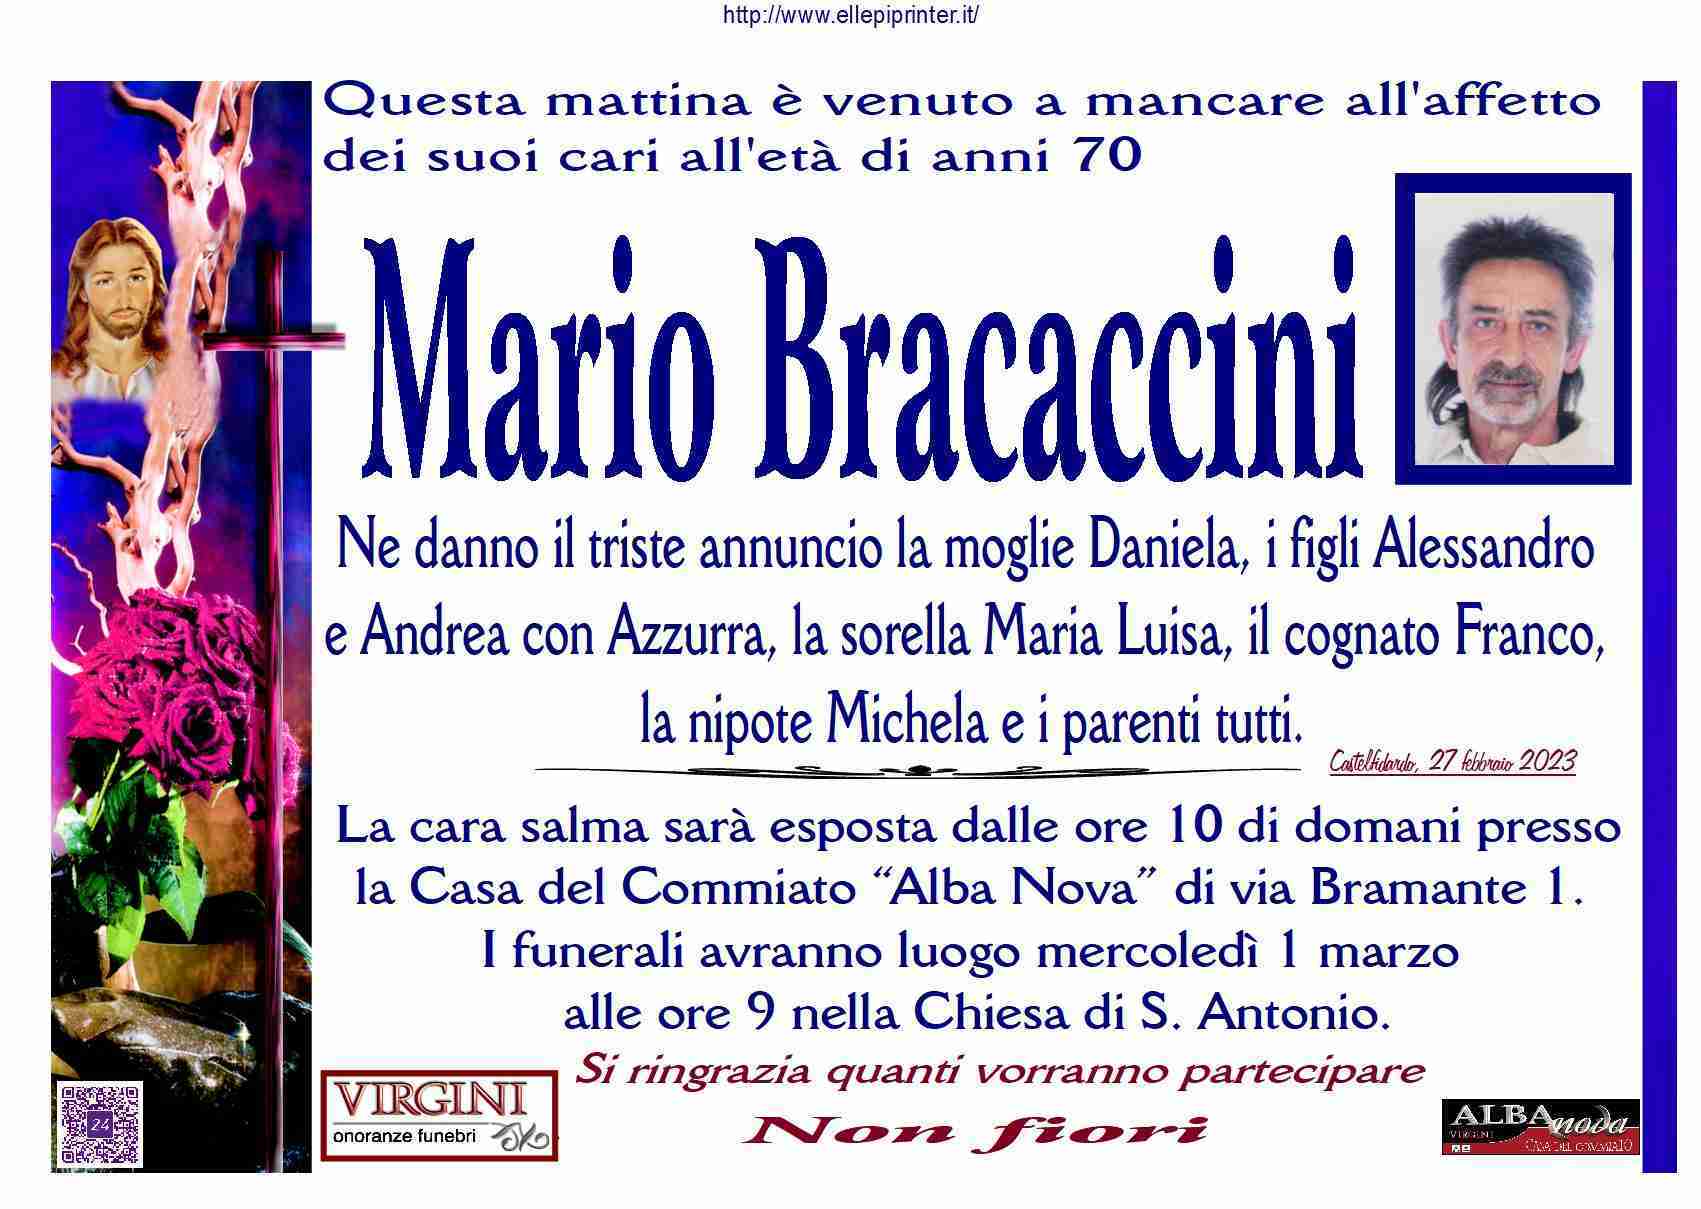 Mario Bracaccini